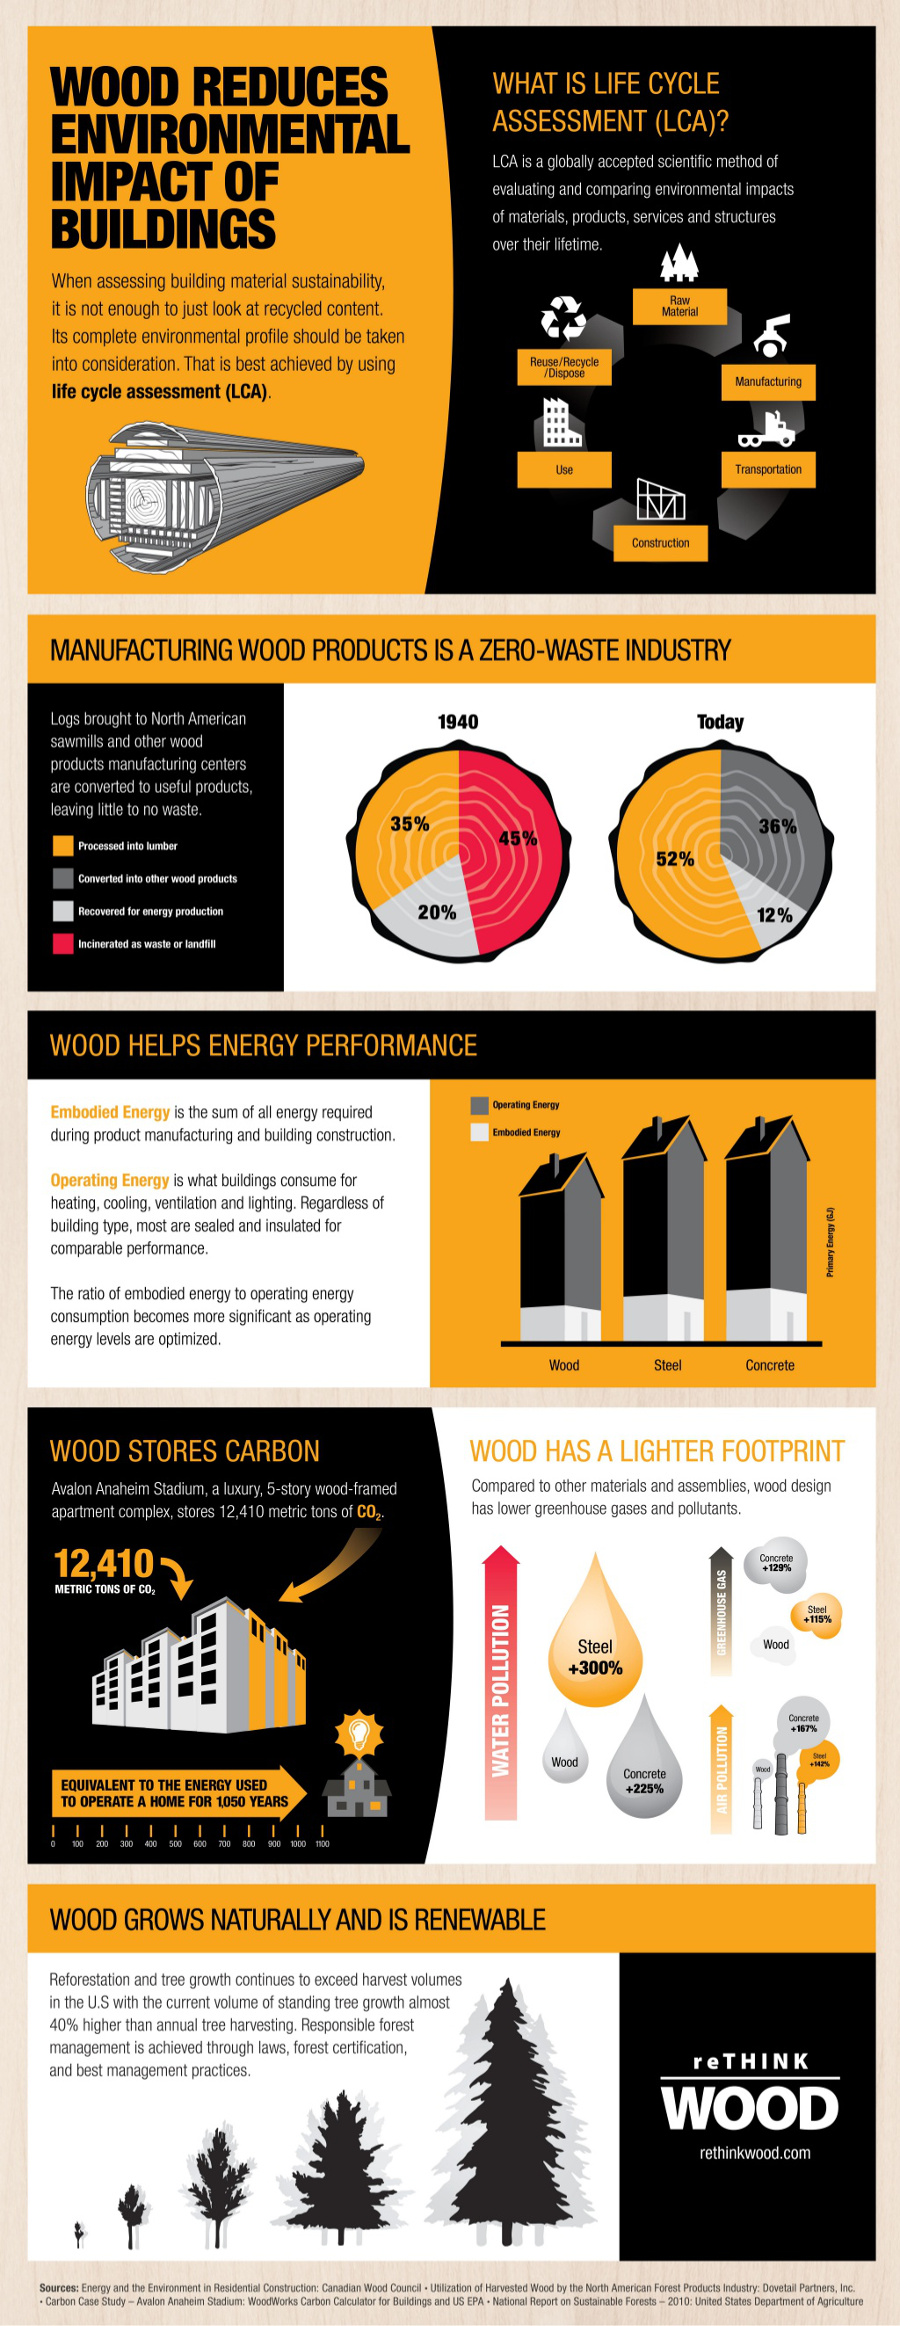 Rethink Wood infographic